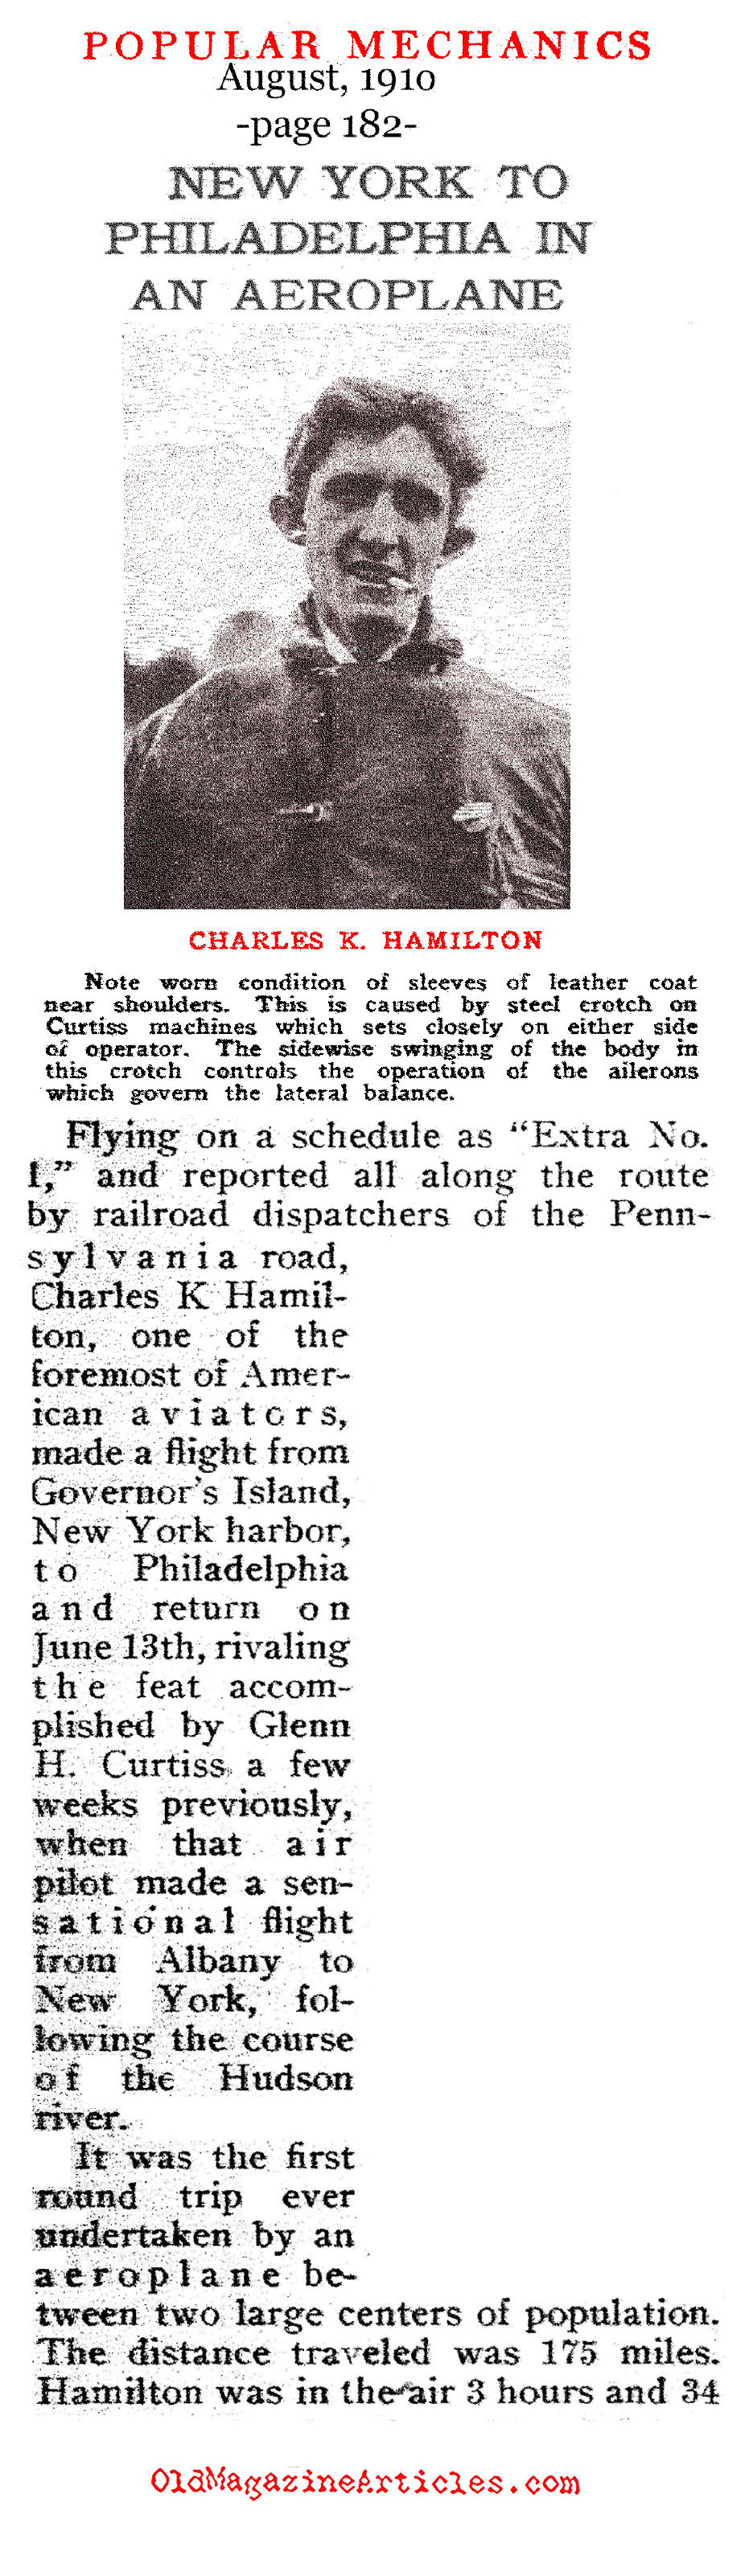 New York to Philadelphia in Record Time (Popular Mechanics, 1910)